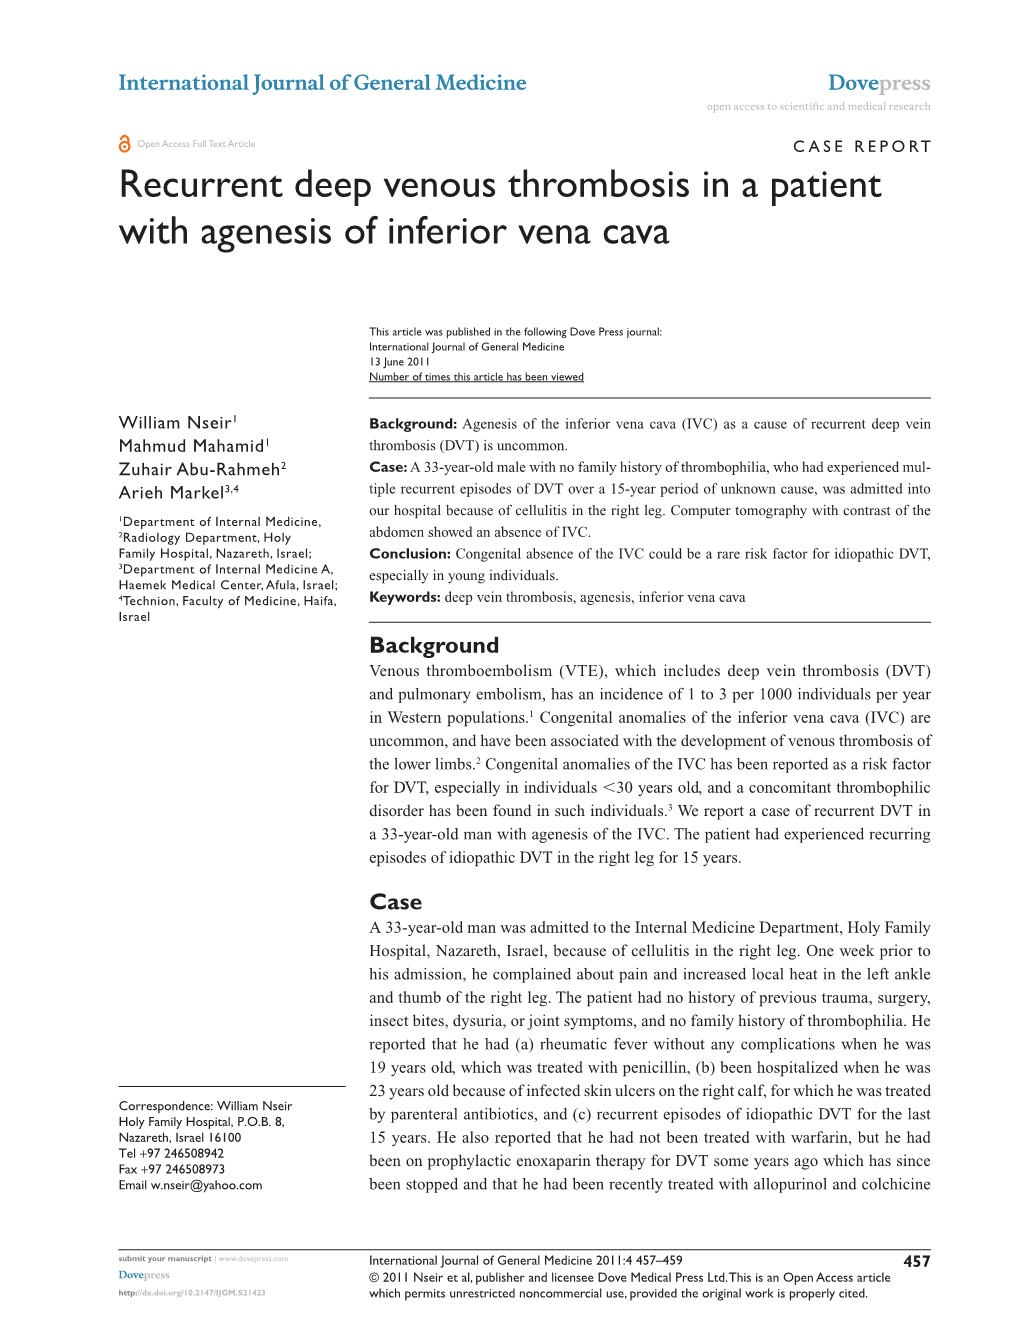 Recurrent Deep Venous Thrombosis in a Patient with Agenesis of Inferior Vena Cava